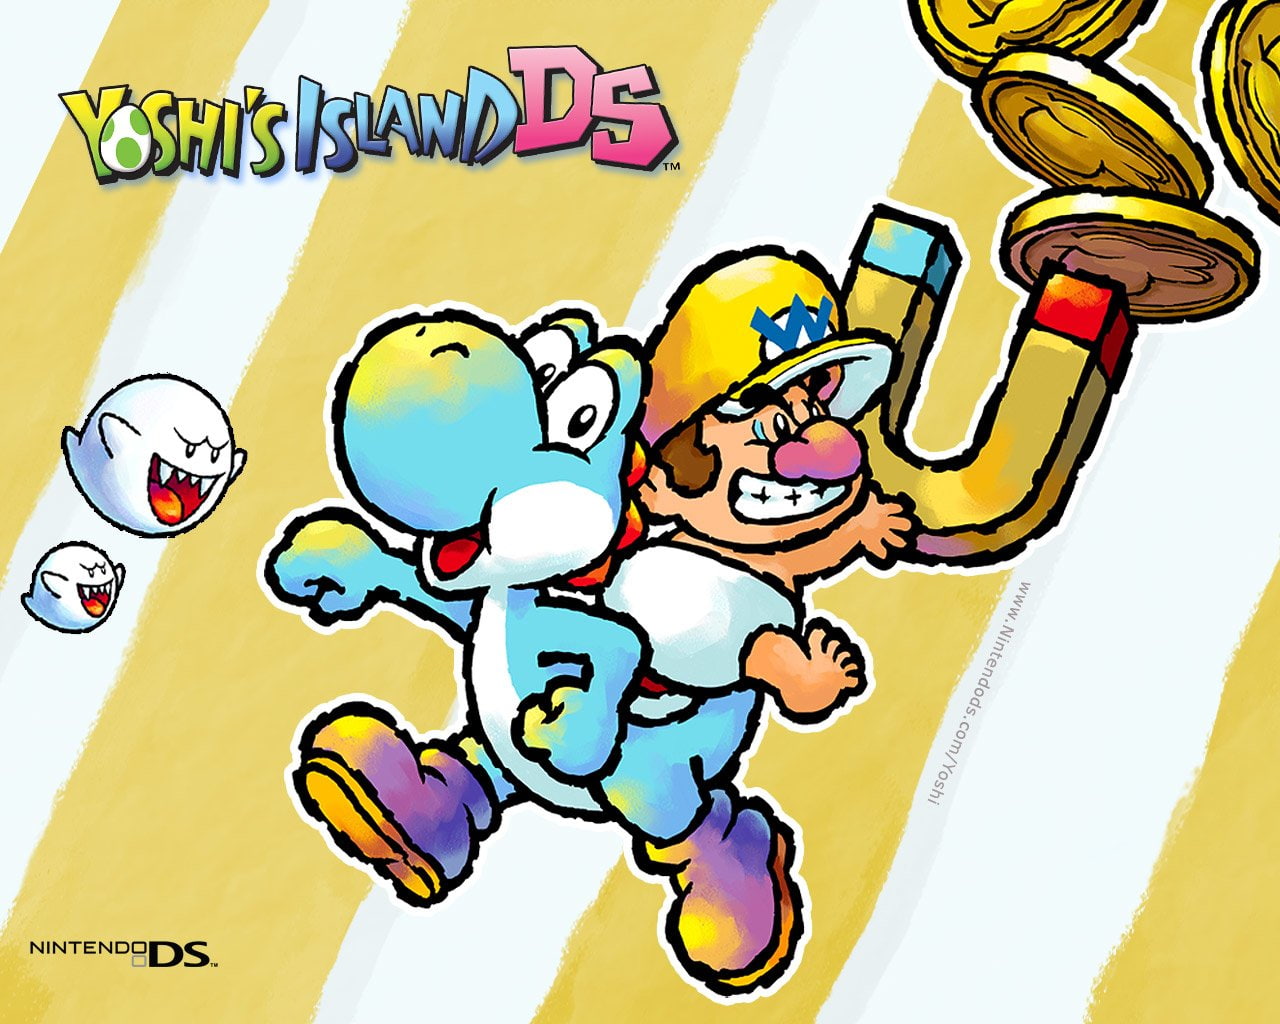 Mario, Yoshi's Island Ds, Boo